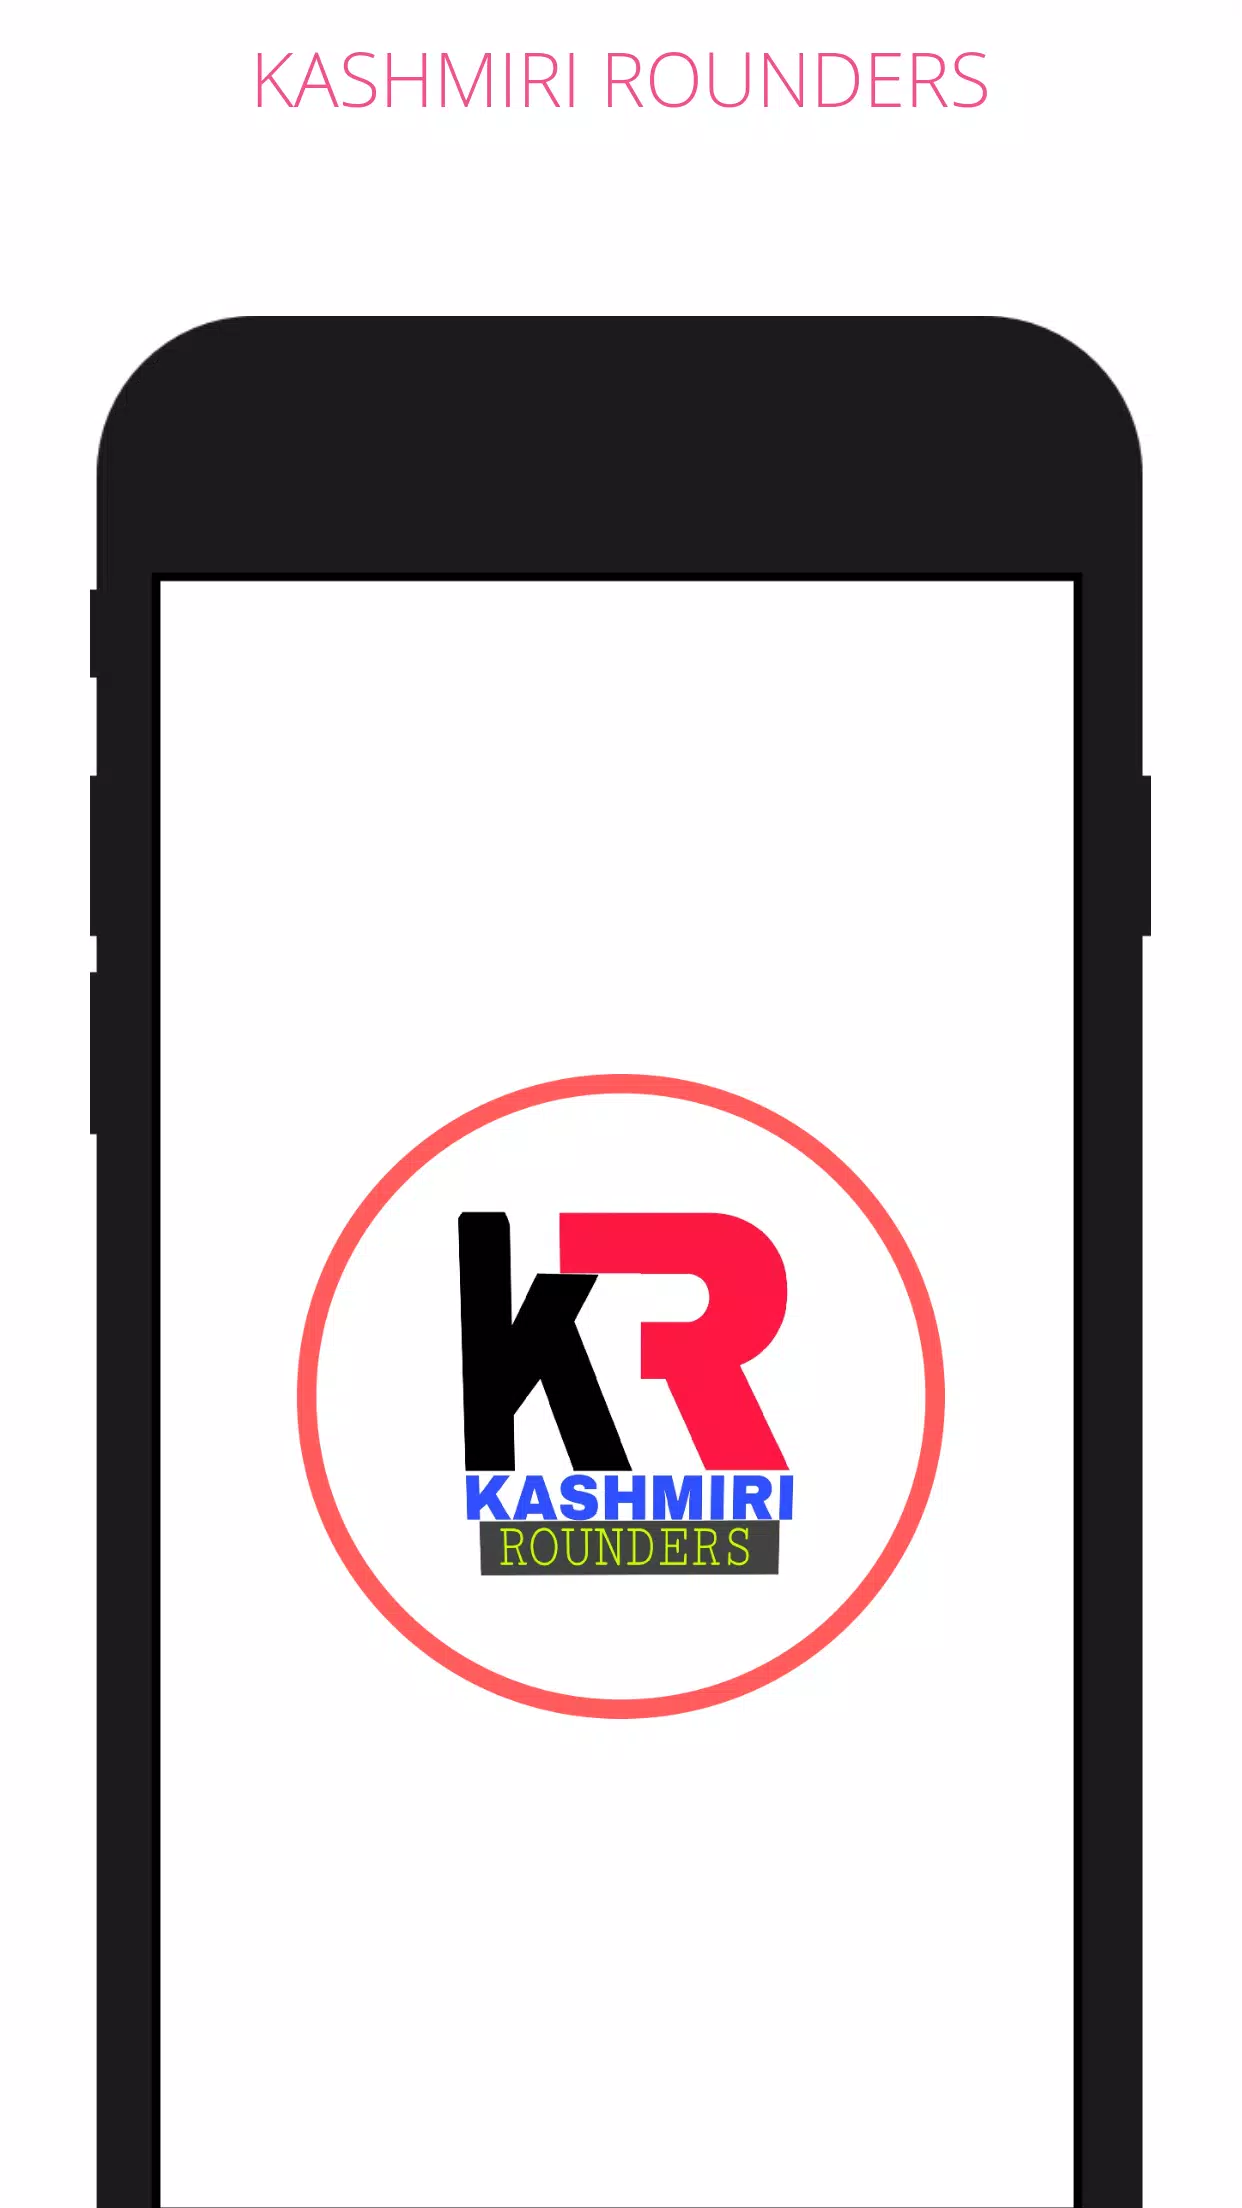 KASHMIRI ROUNDERS - KASHMIRI COMEDY, DRAMA, JOKES APK for Android Download